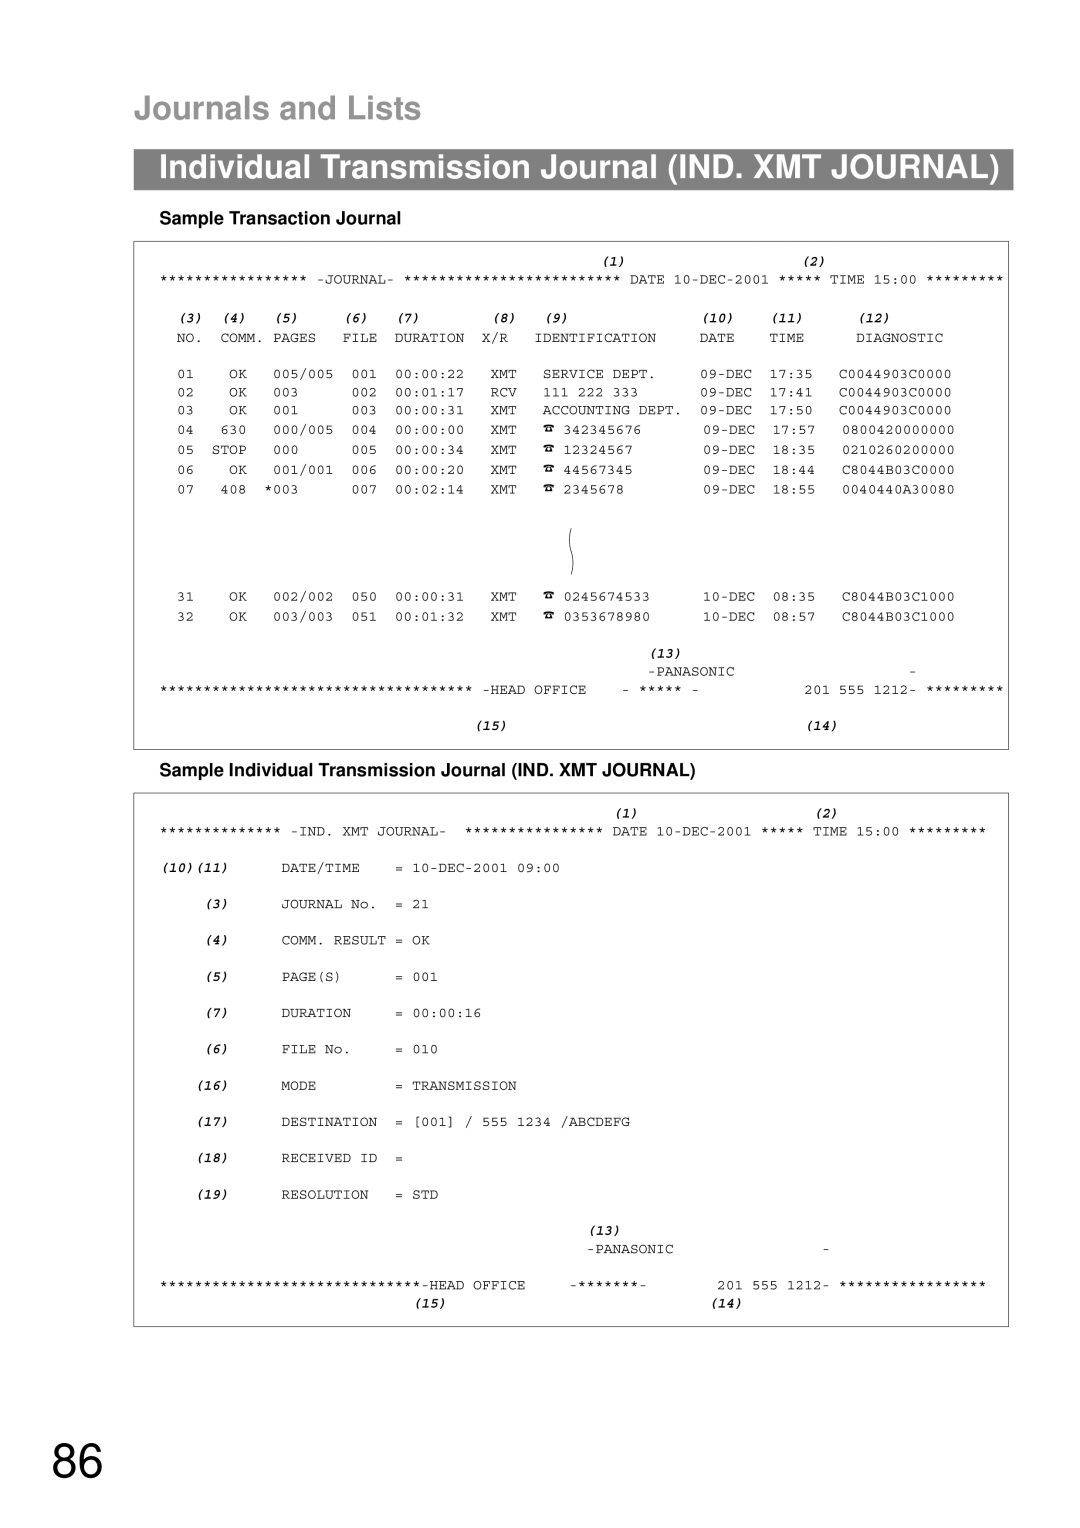 Castelle UF-490 appendix Journals and Lists, Individual Transmission Journal IND. XMT JOURNAL, Sample Transaction Journal 